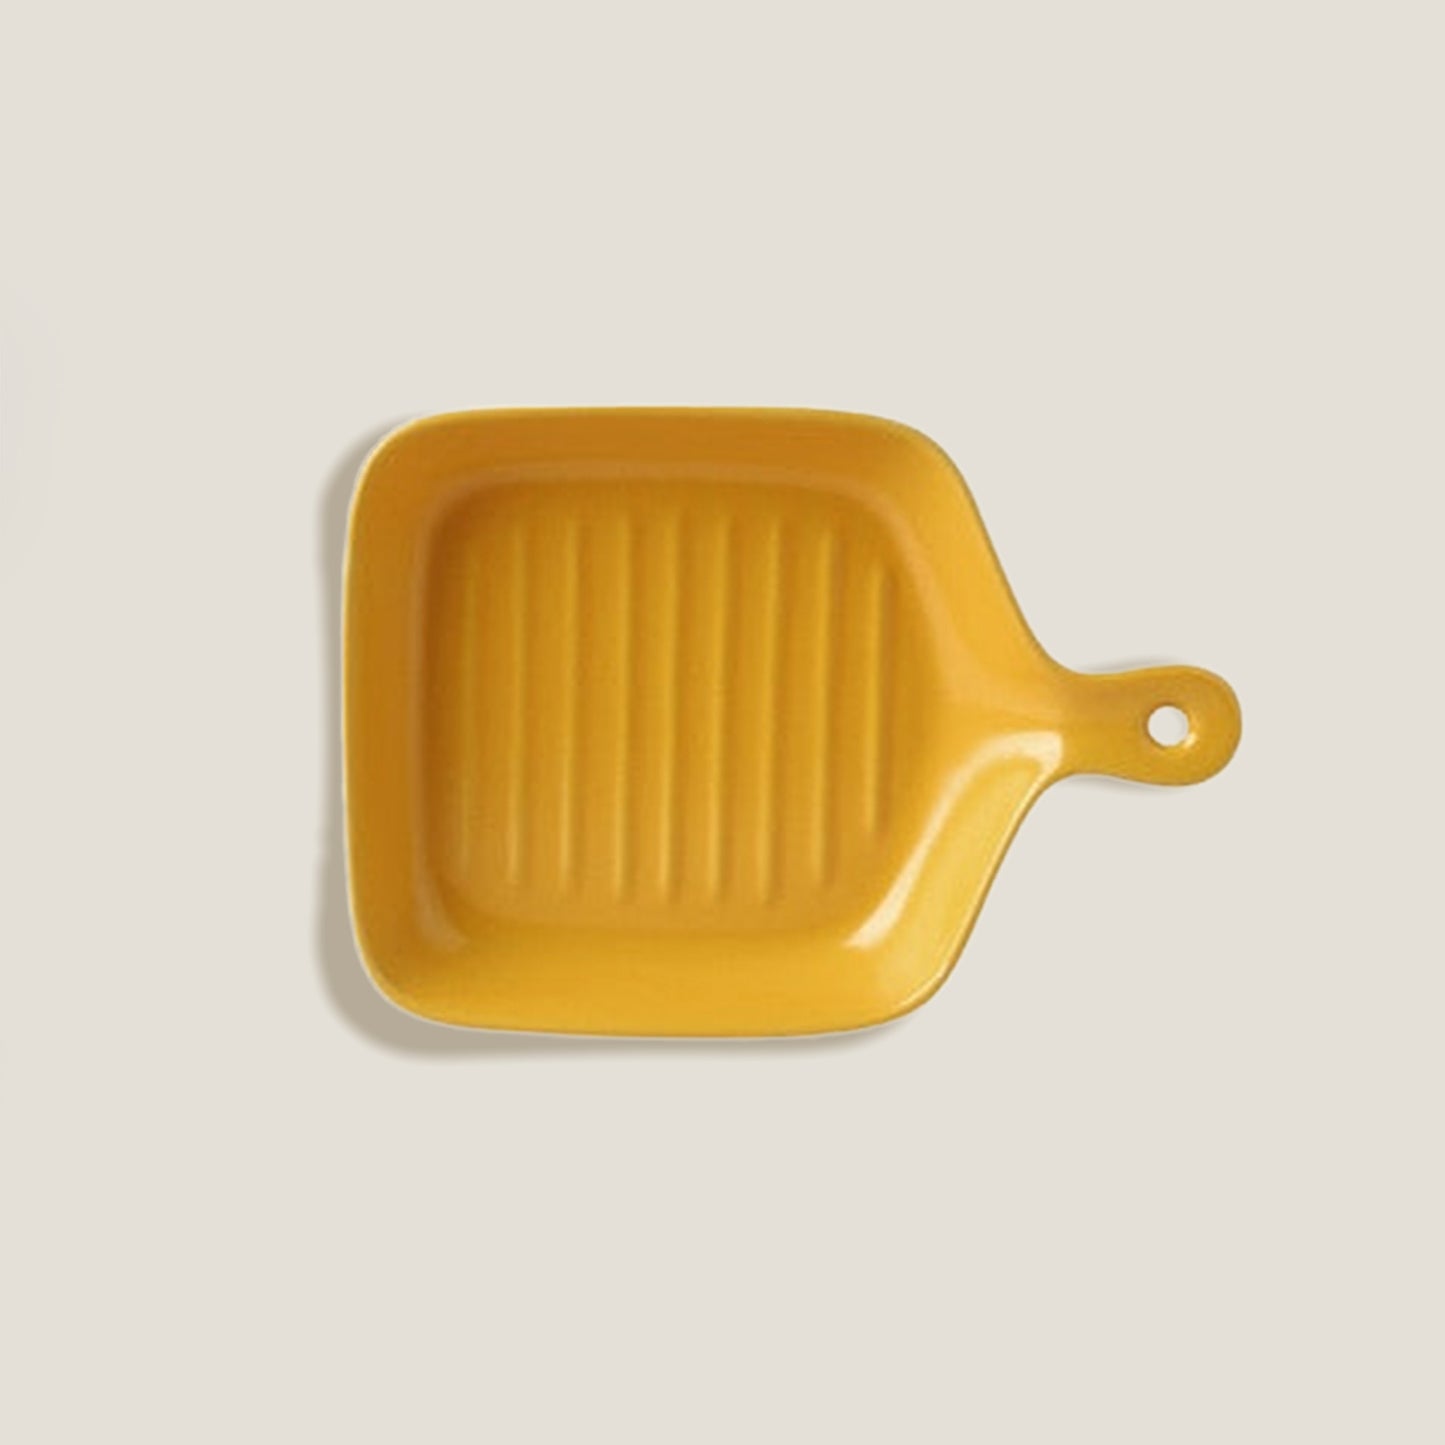 Yellow Baking Tray Plate